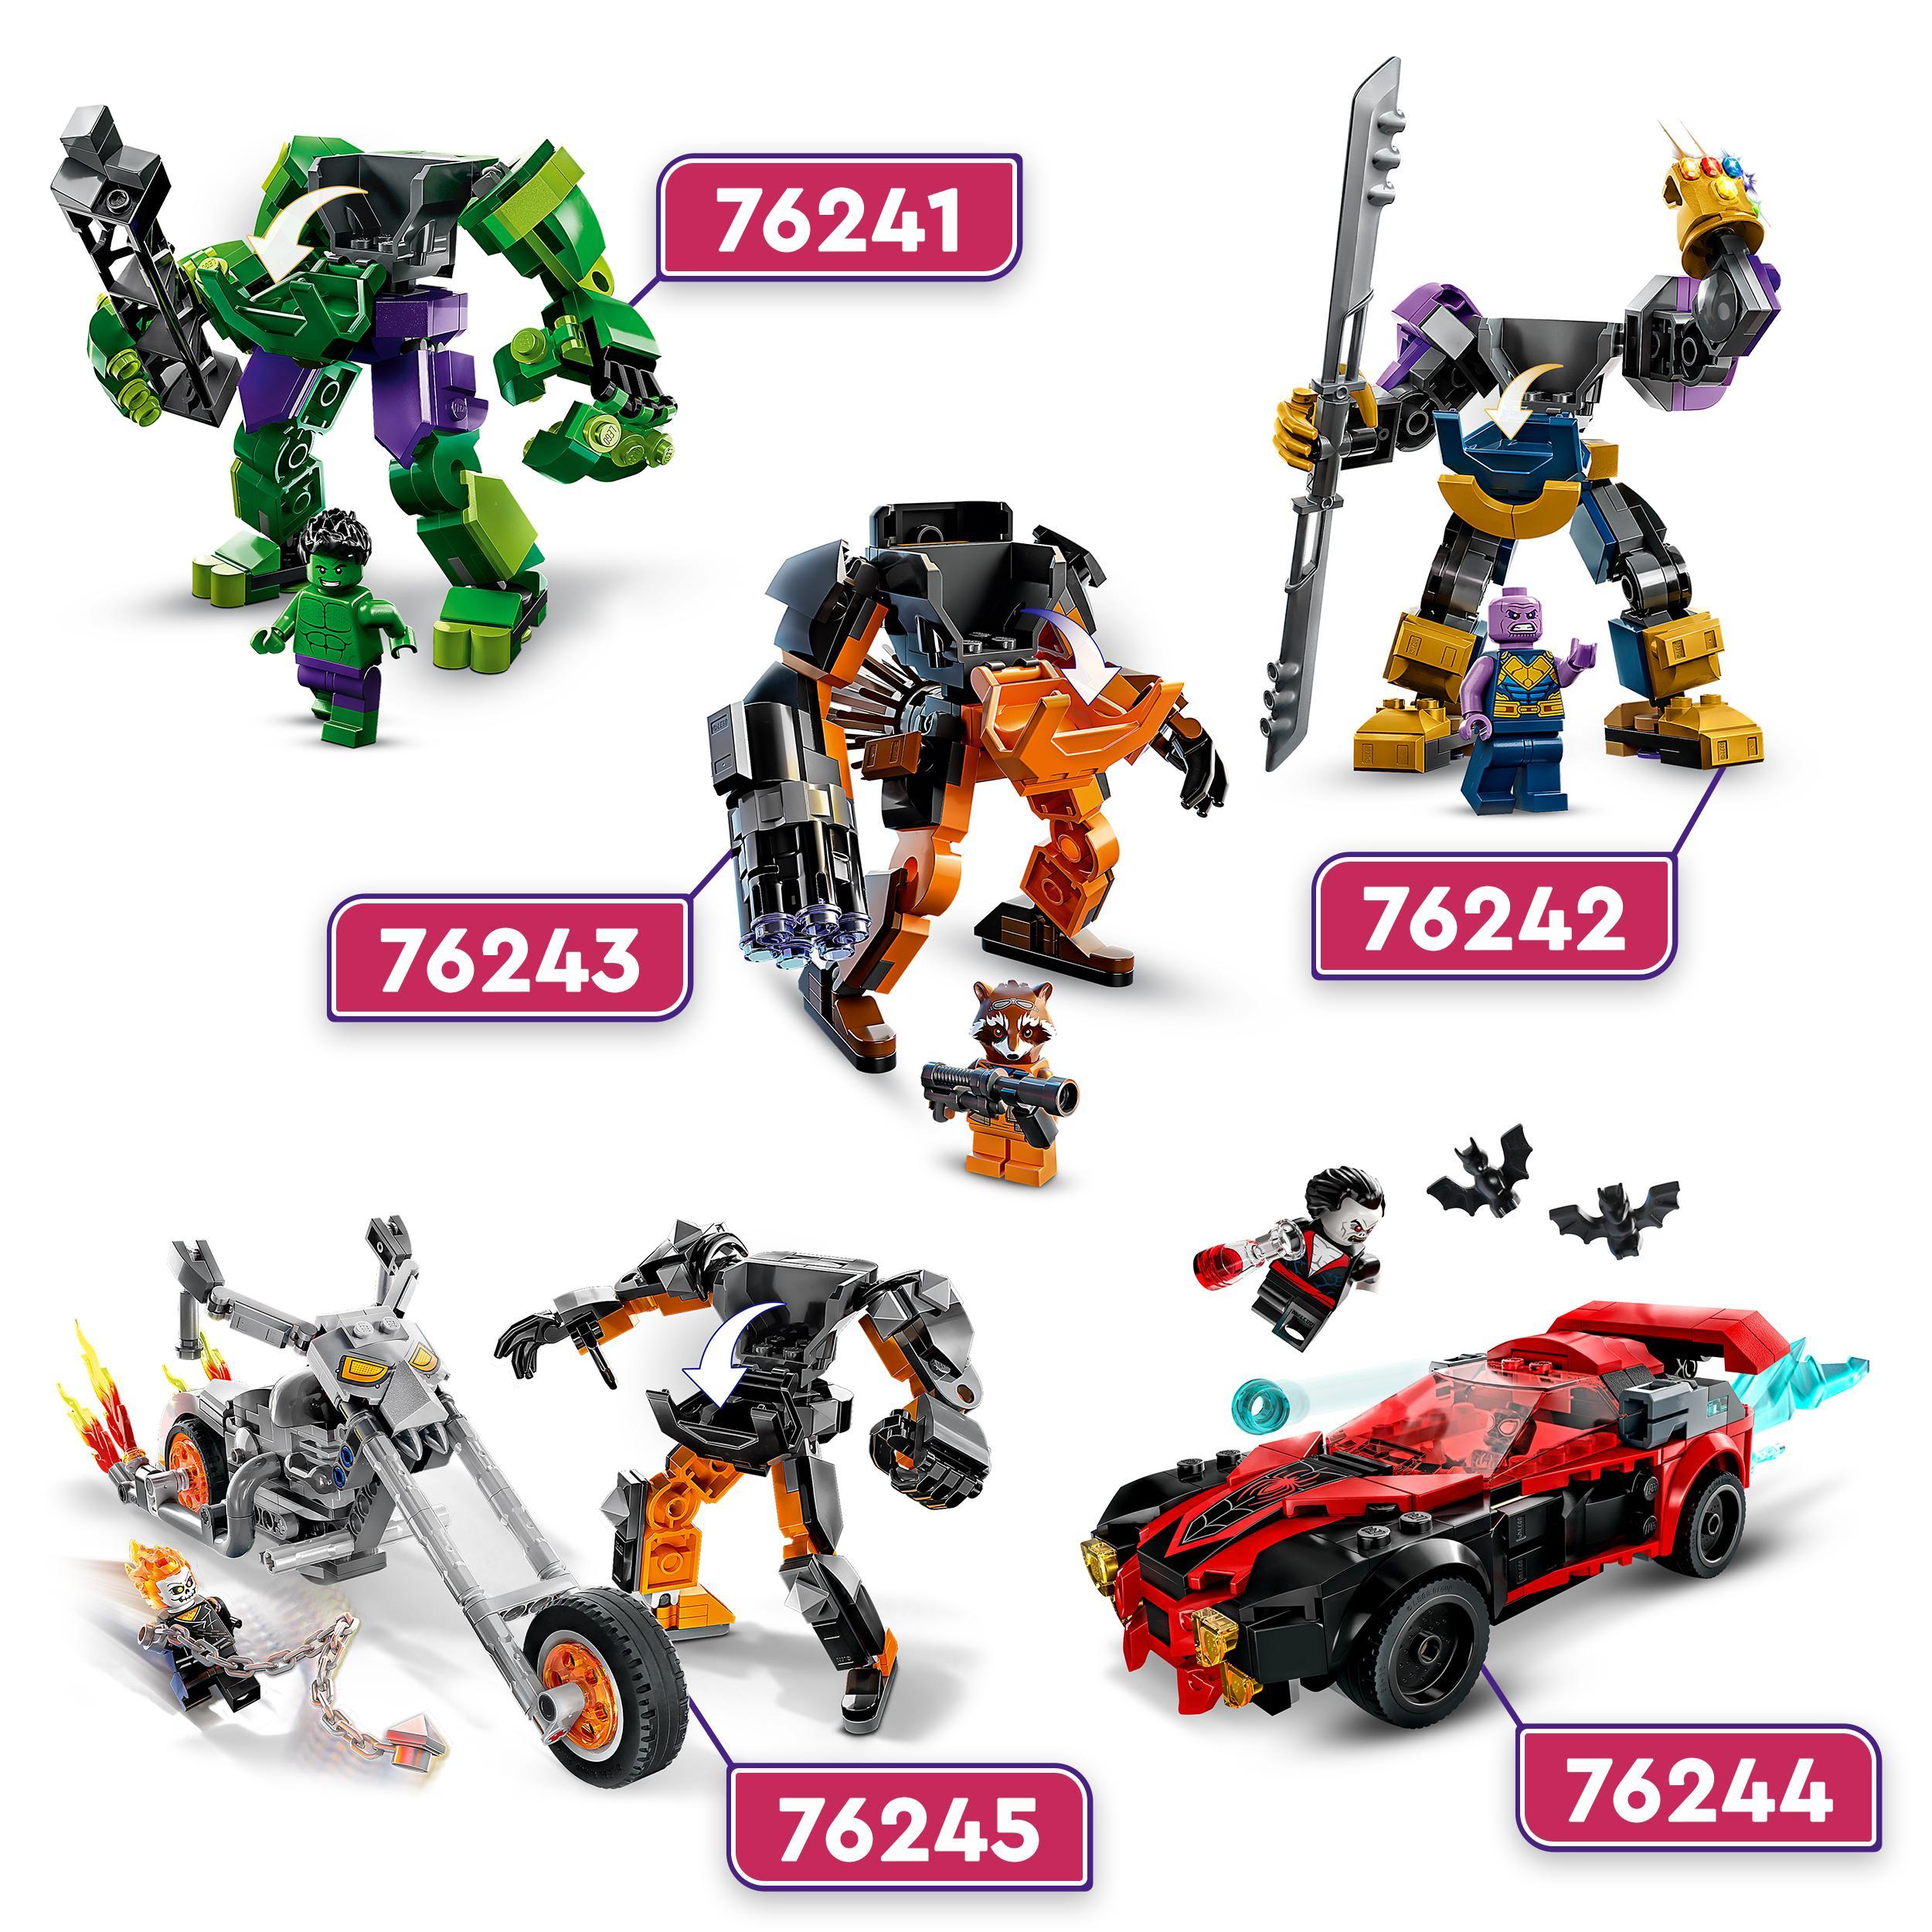 Lego marvel 76243 armatura mech rocket, action figure supereroe guardiani della galassia, idea regalo avengers per bambini - LEGO SUPER HEROES, Avengers